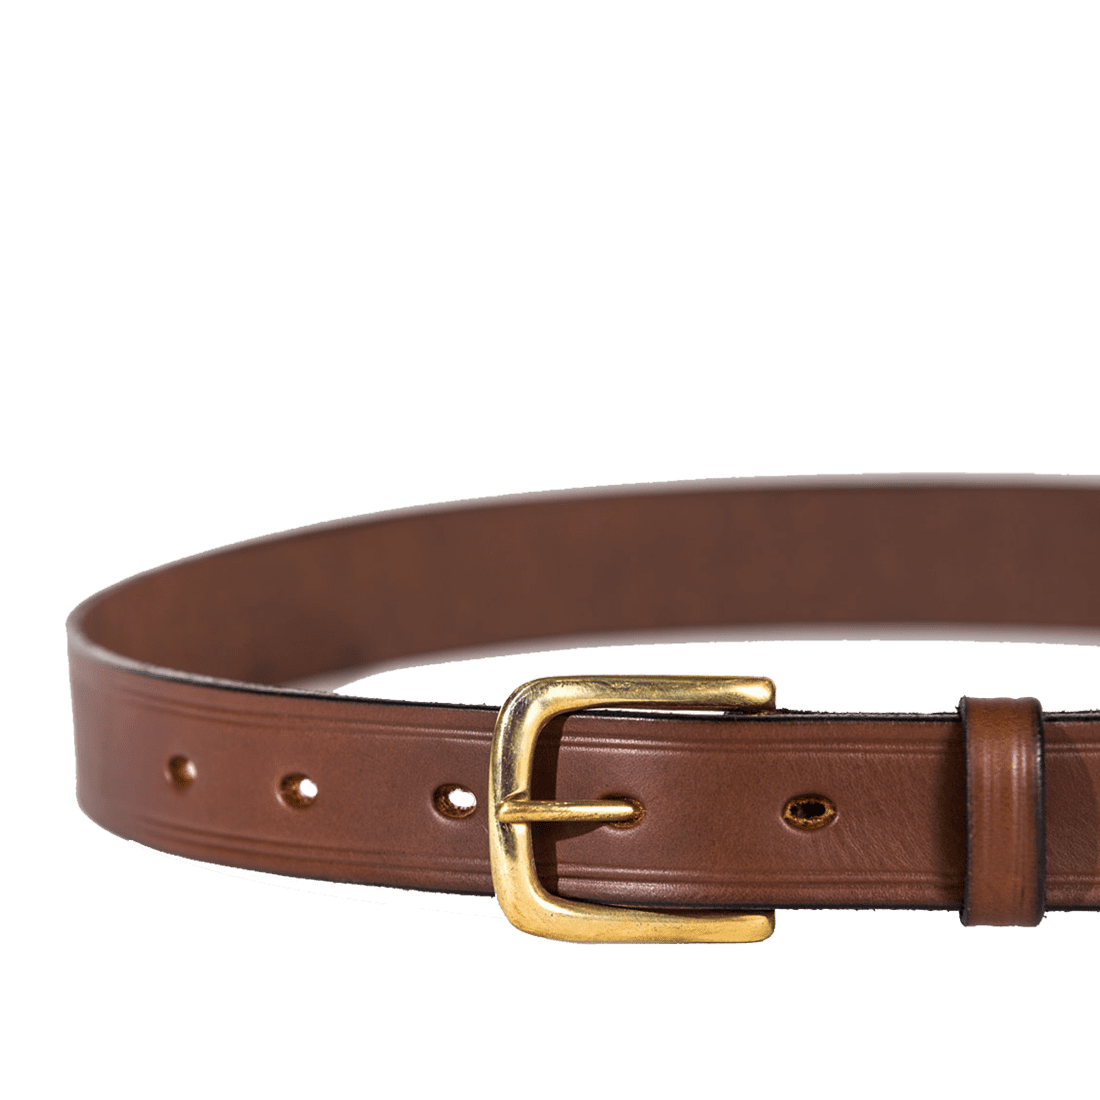 Leather West End belt in Italian saddle hide chestnut colour, handmade by Mackenzie Leather Edinburgh.